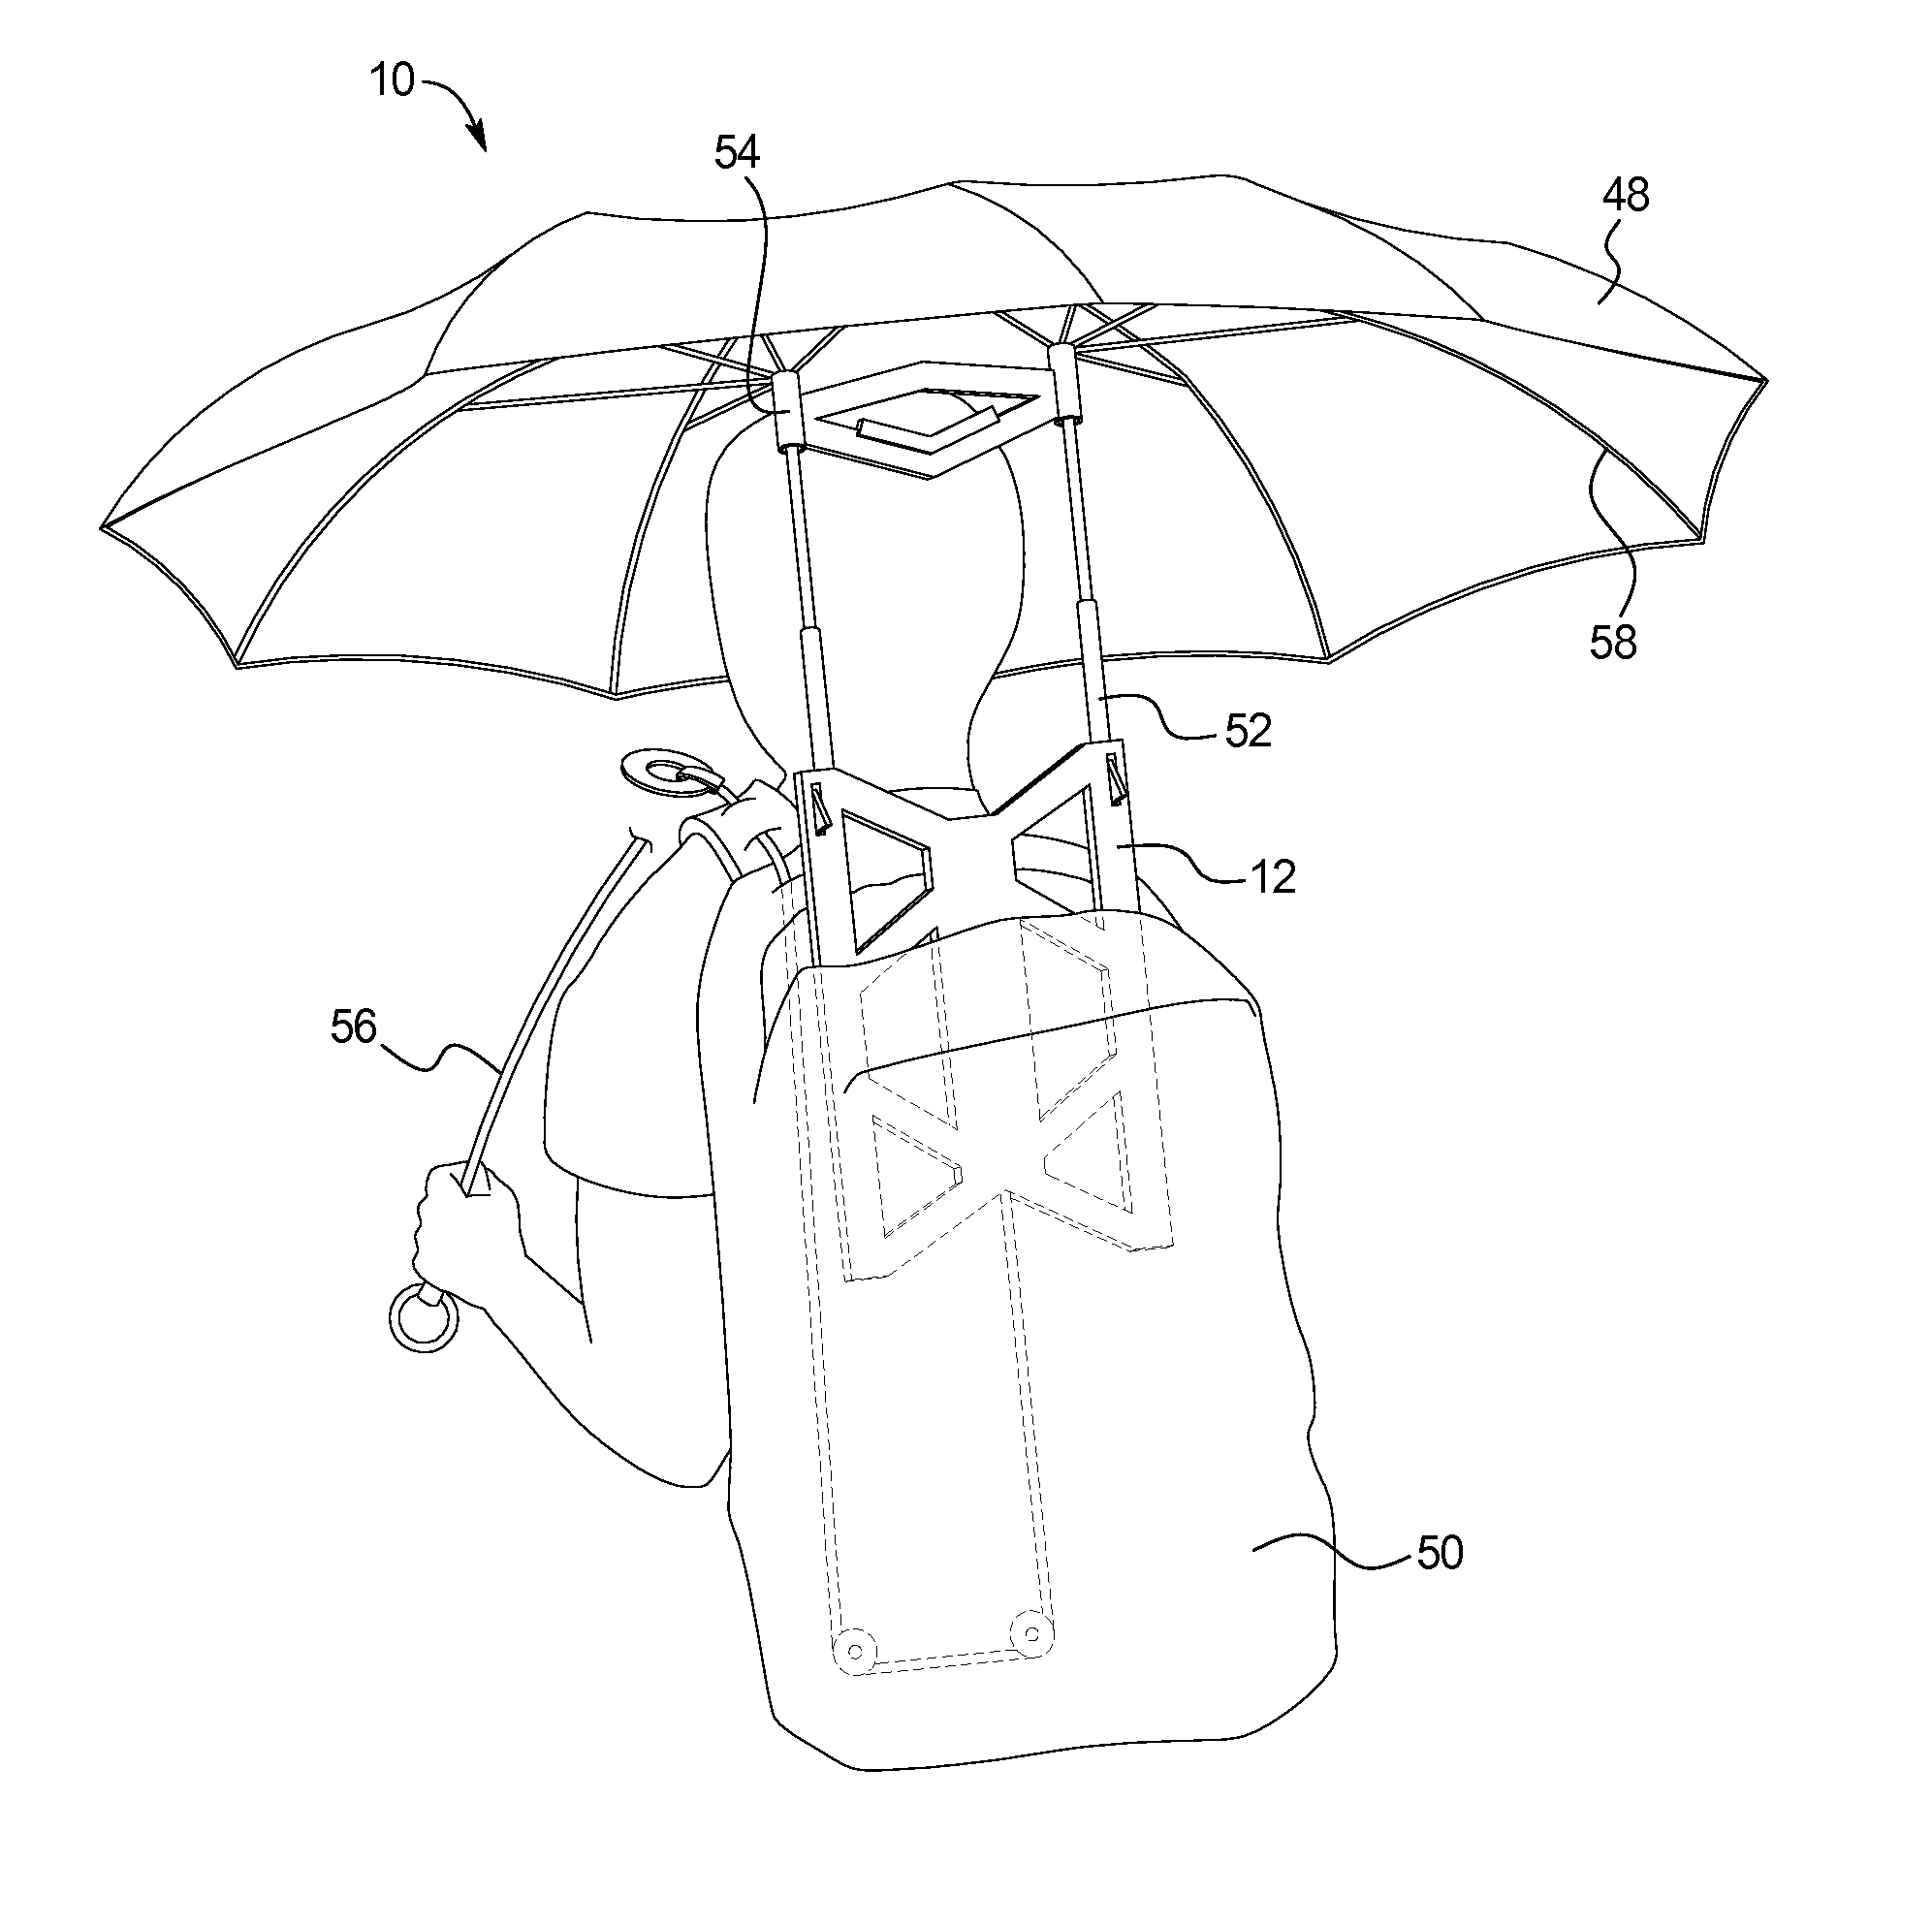 Umbrella backpack and deployment mechanism